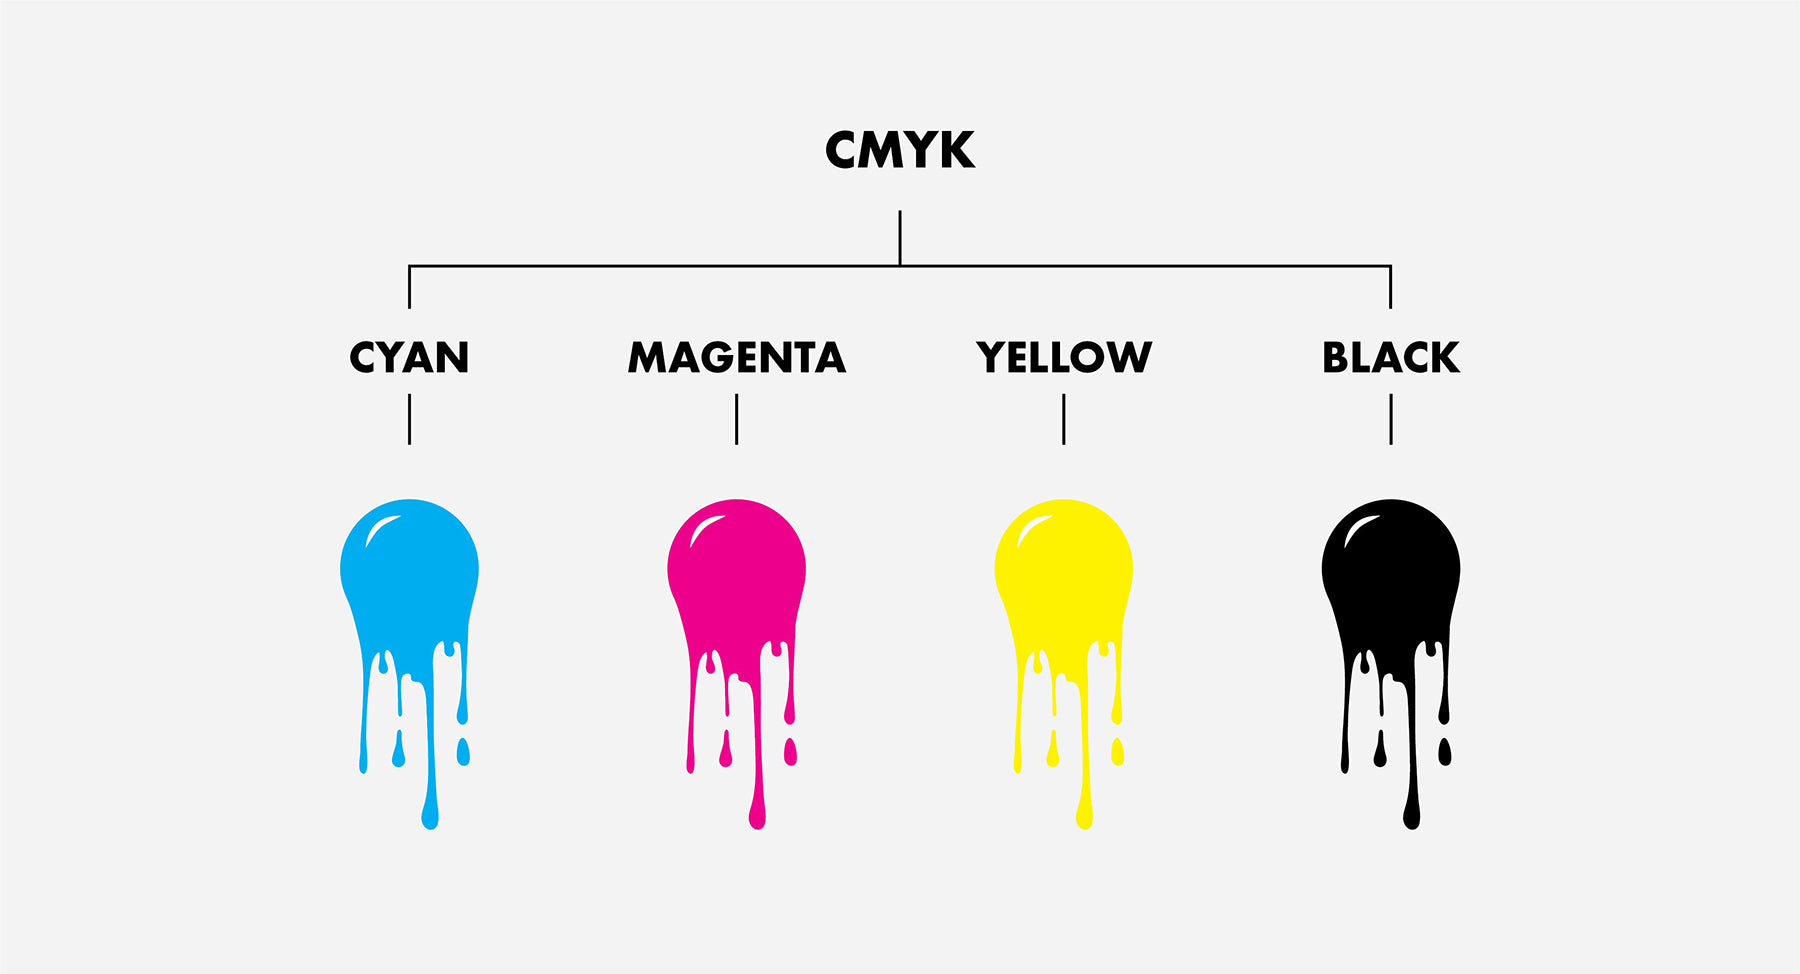 CMYK color space